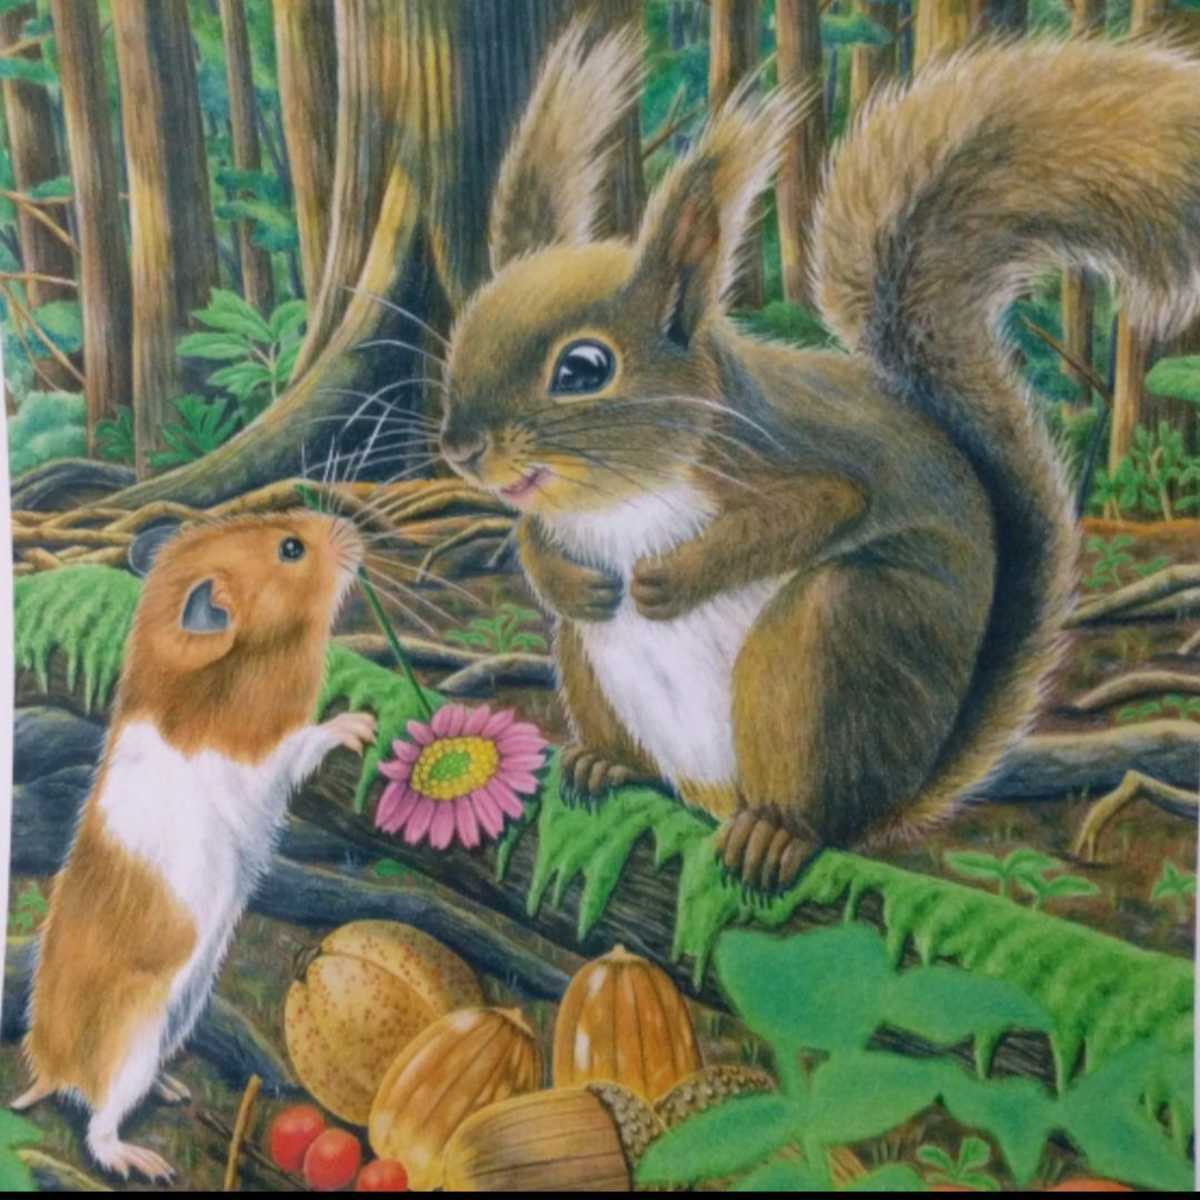 B5 手描きイラストプリント ほのぼの ハムスター リス 動物 可愛い 木の実 森 楽しい 癒し 絵 正規認証品 新規格 絵